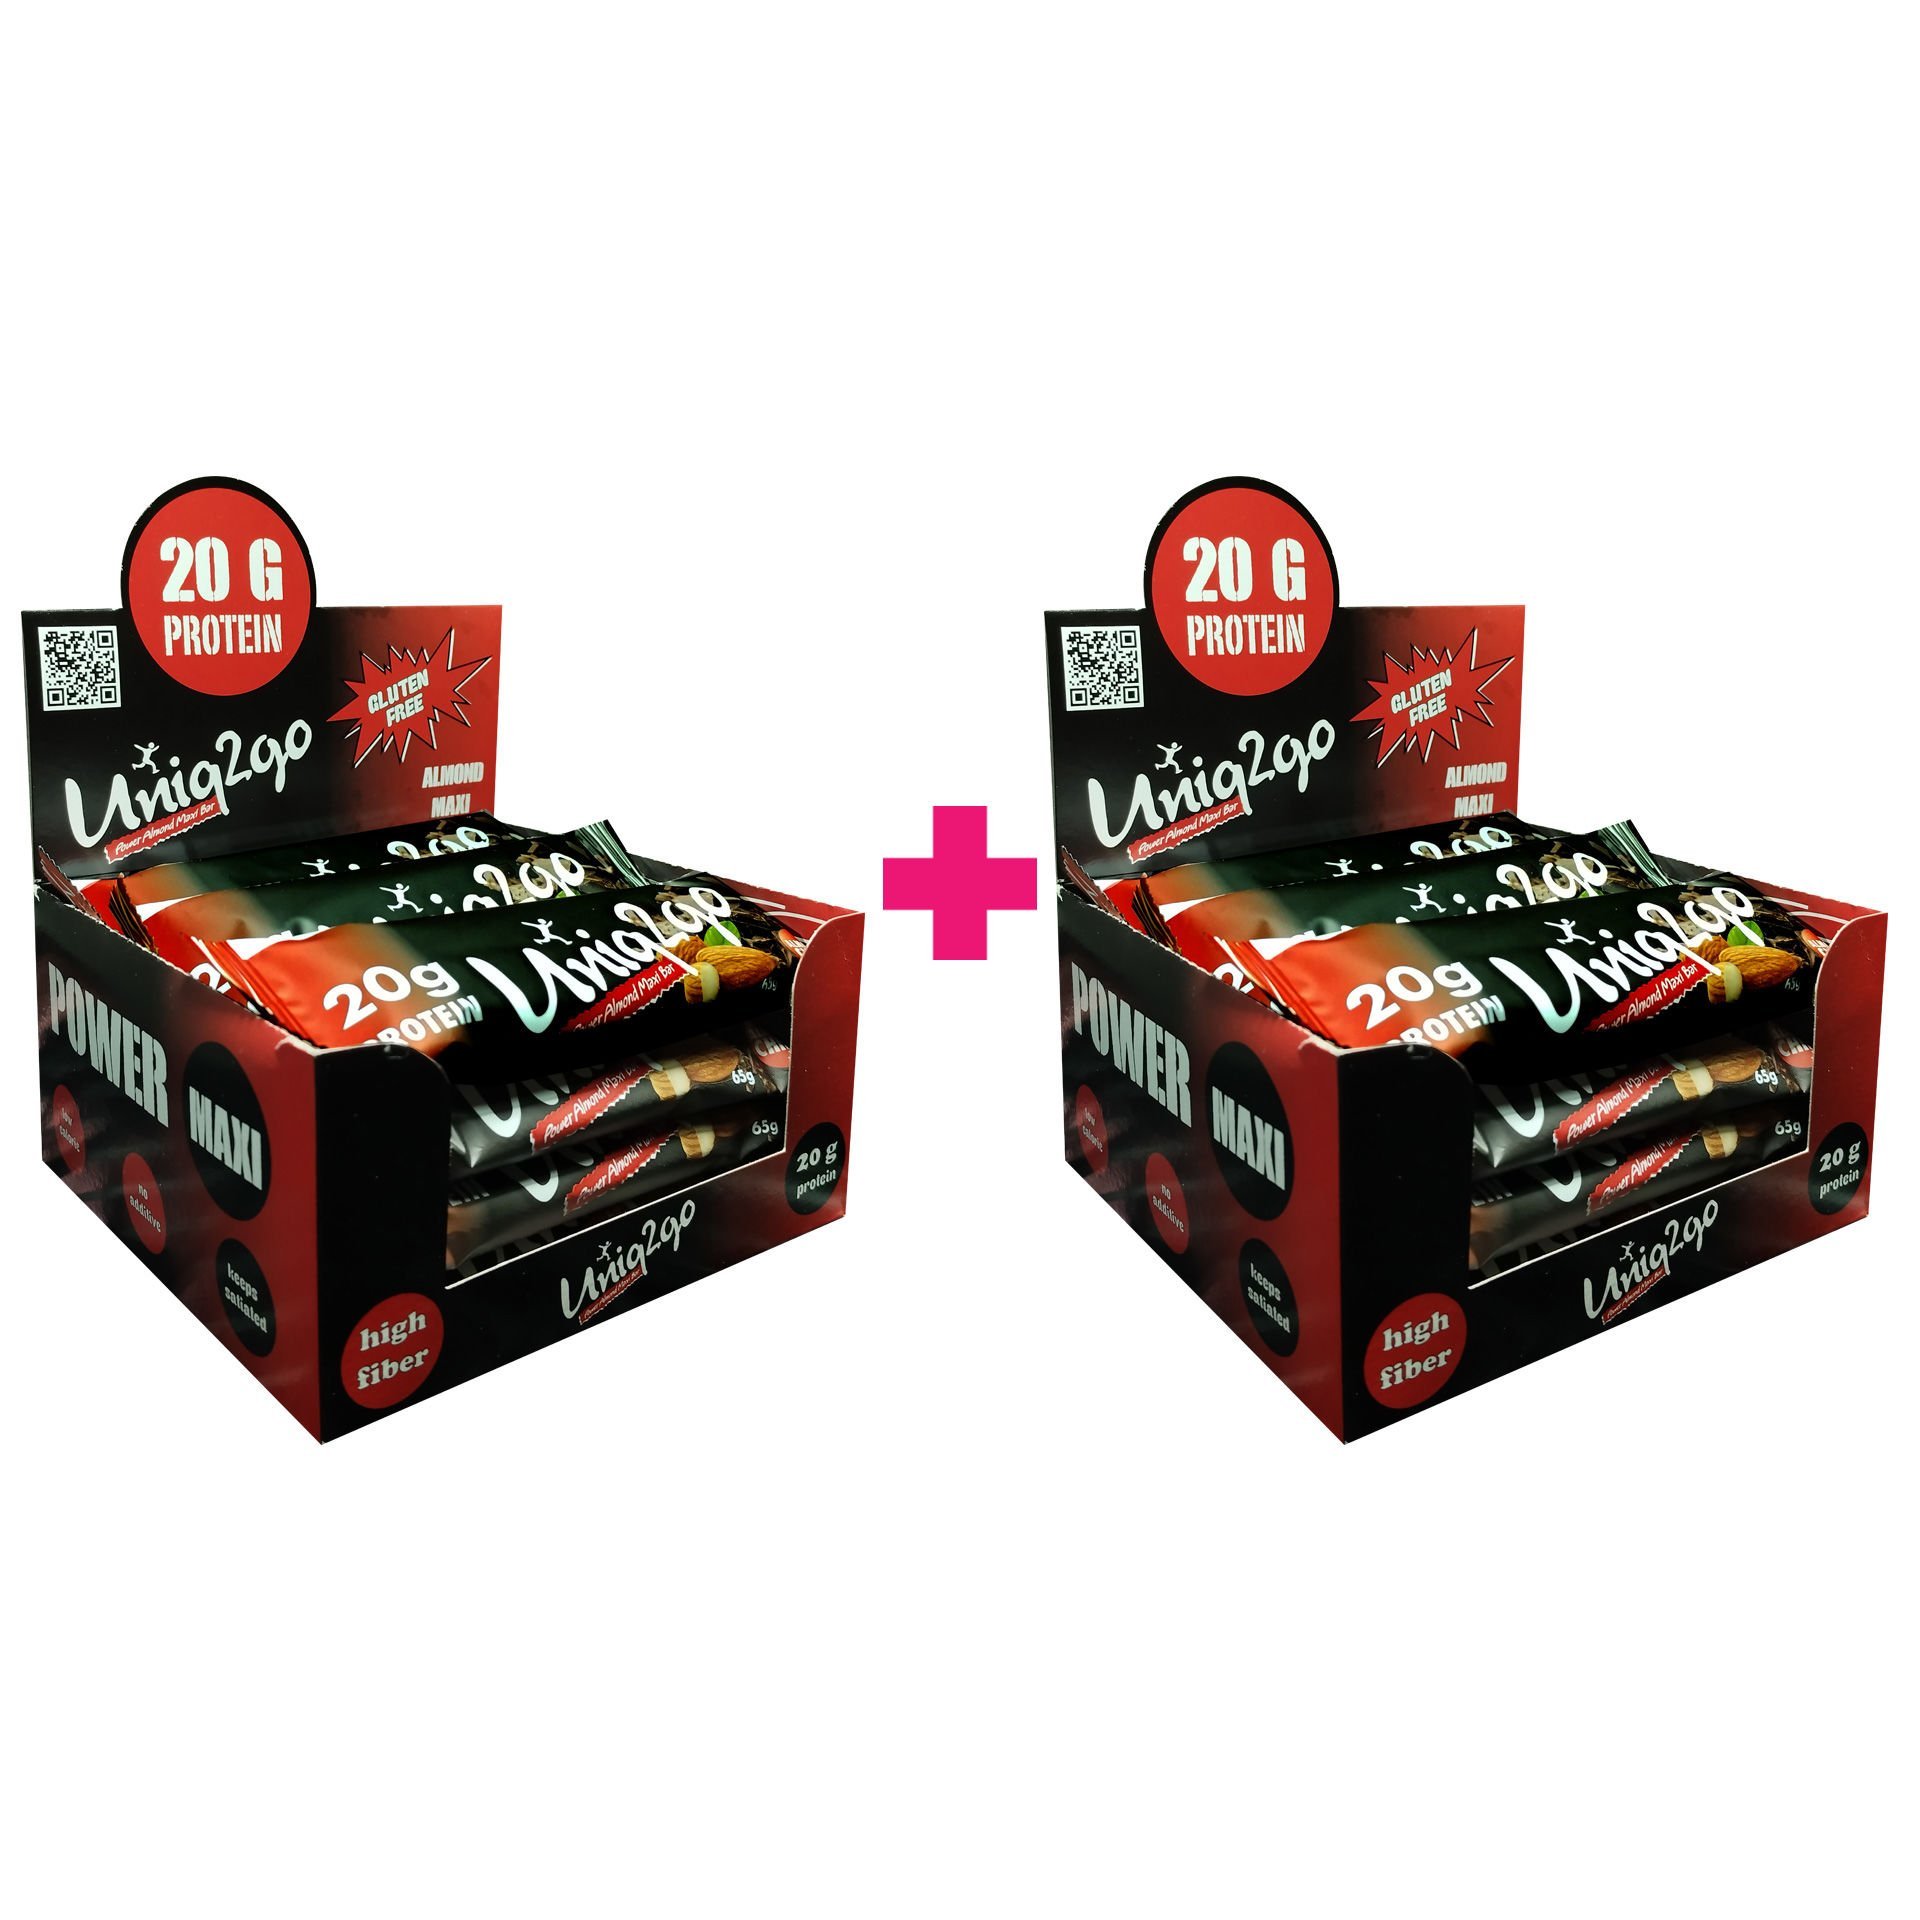 Uniq2go Bademli Power Almond Maxi bar 65 g.12'li 2 kutu (toplam 24 adet)